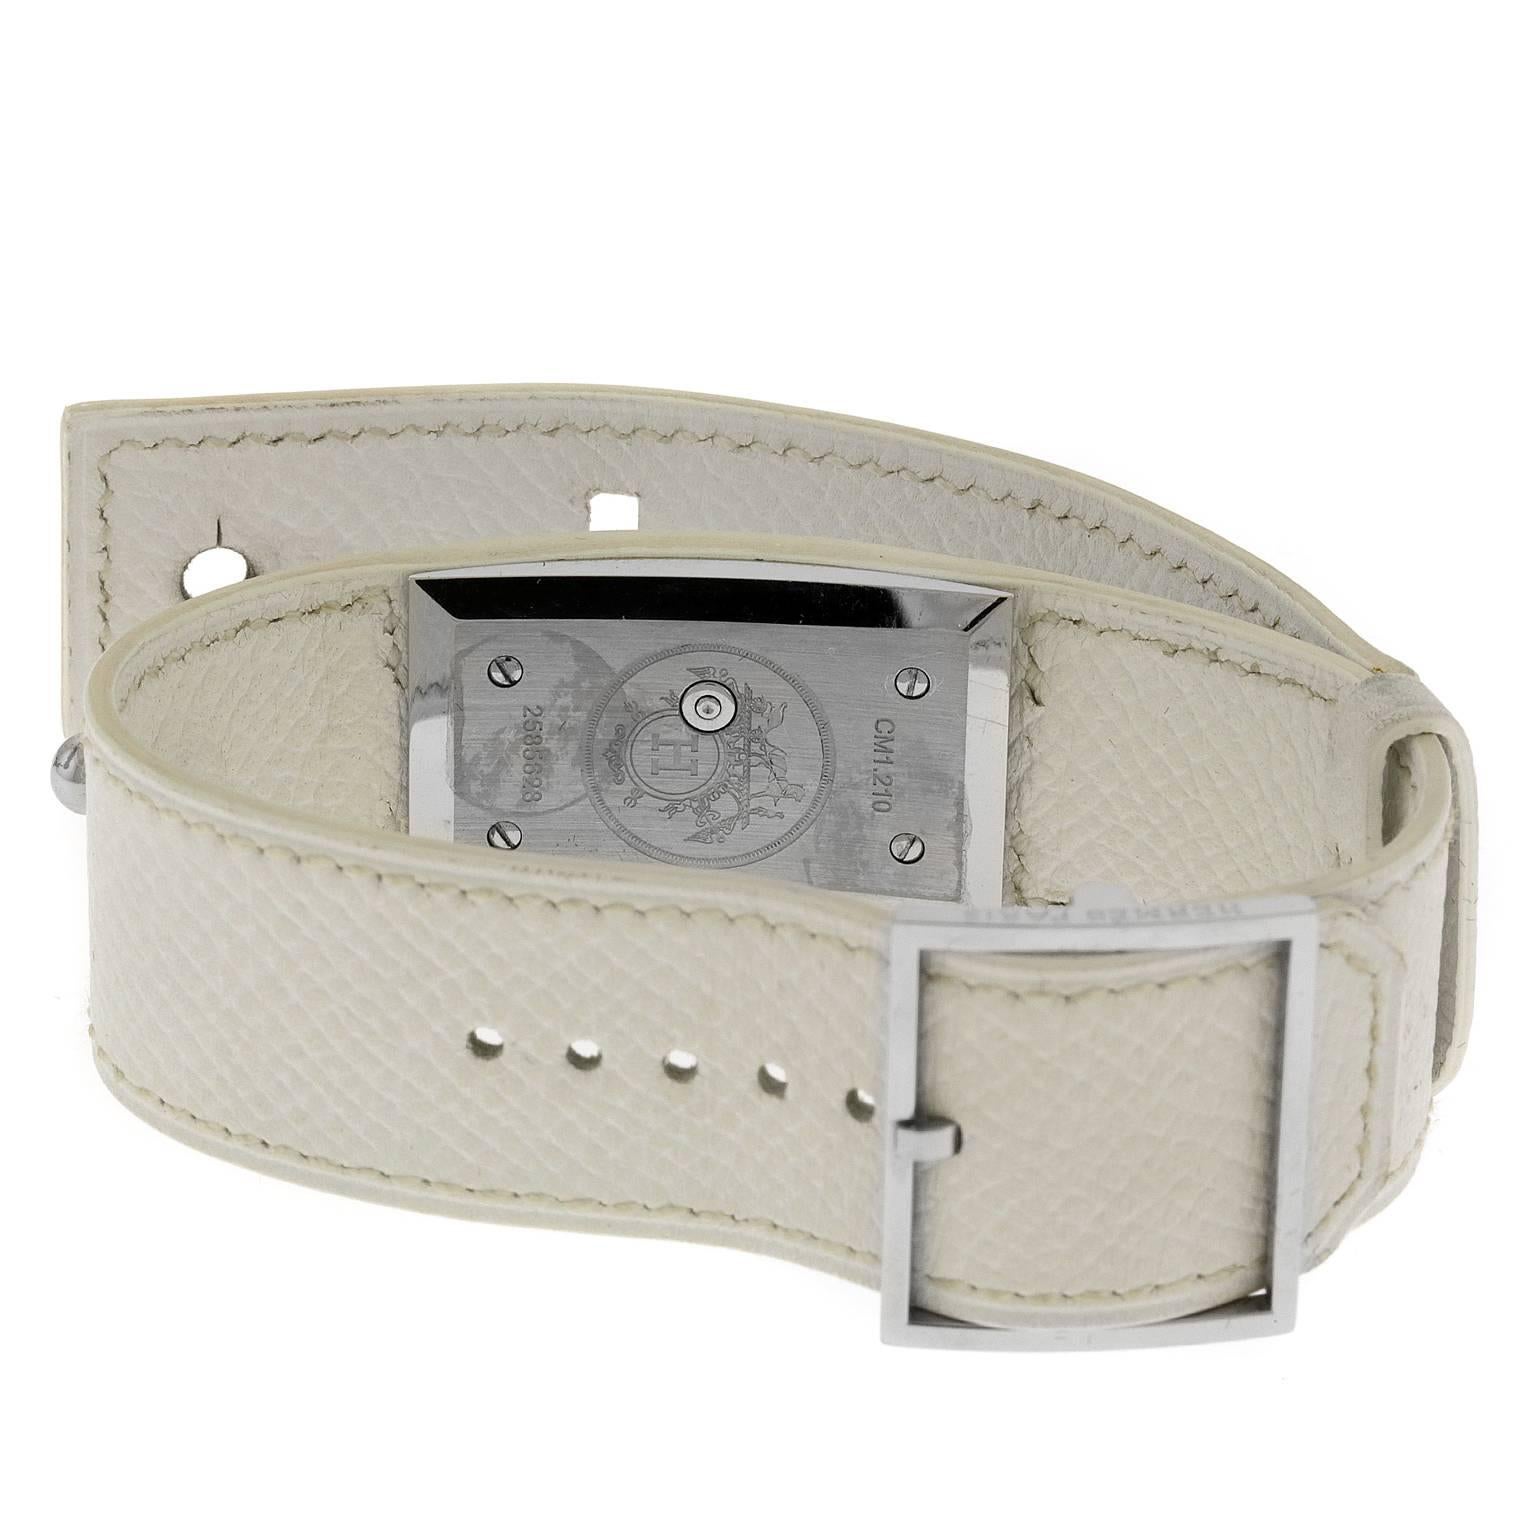  Hermès White Leather Hidden Bracelet Watch 3